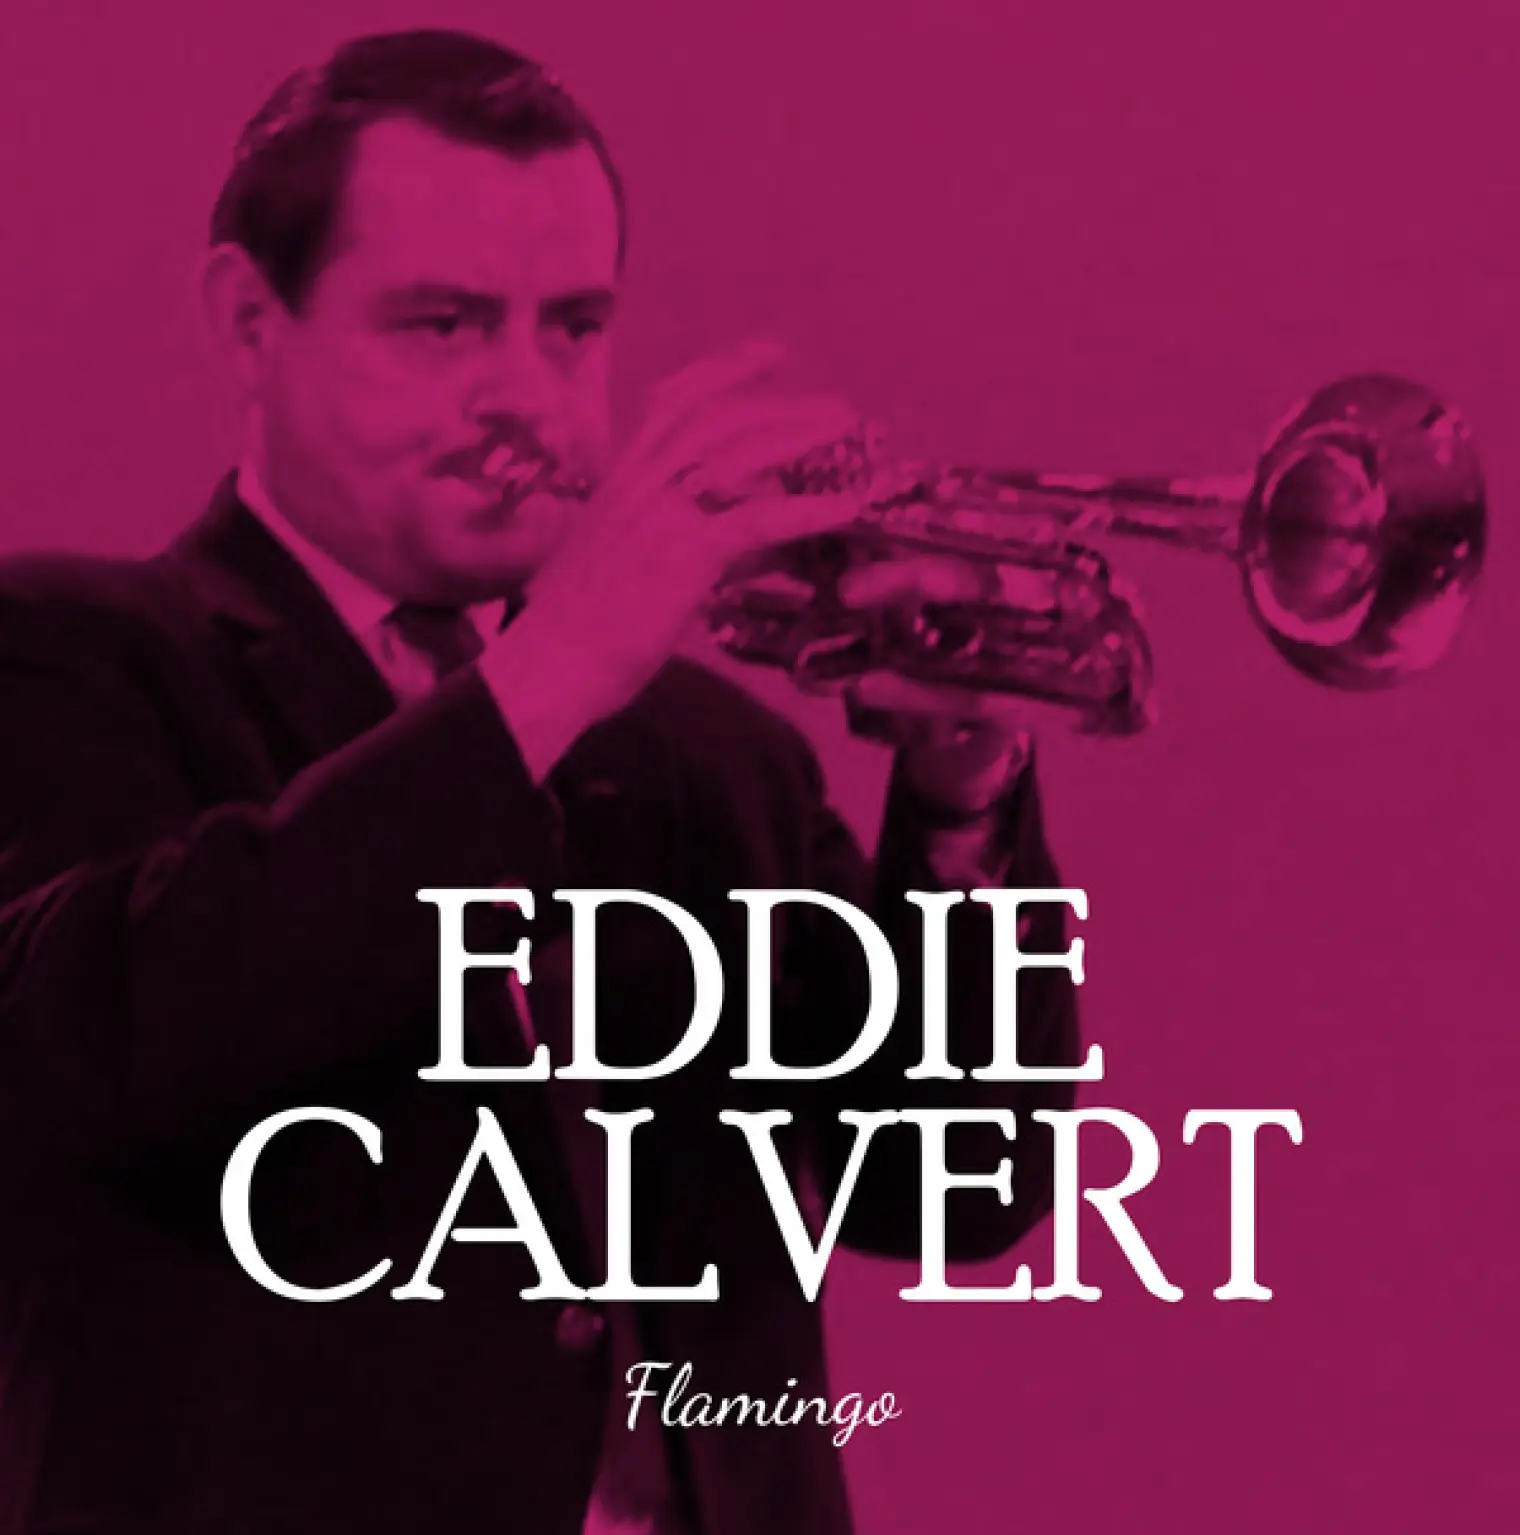 Eddie Calvert flamingo -  Eddie Calvert 